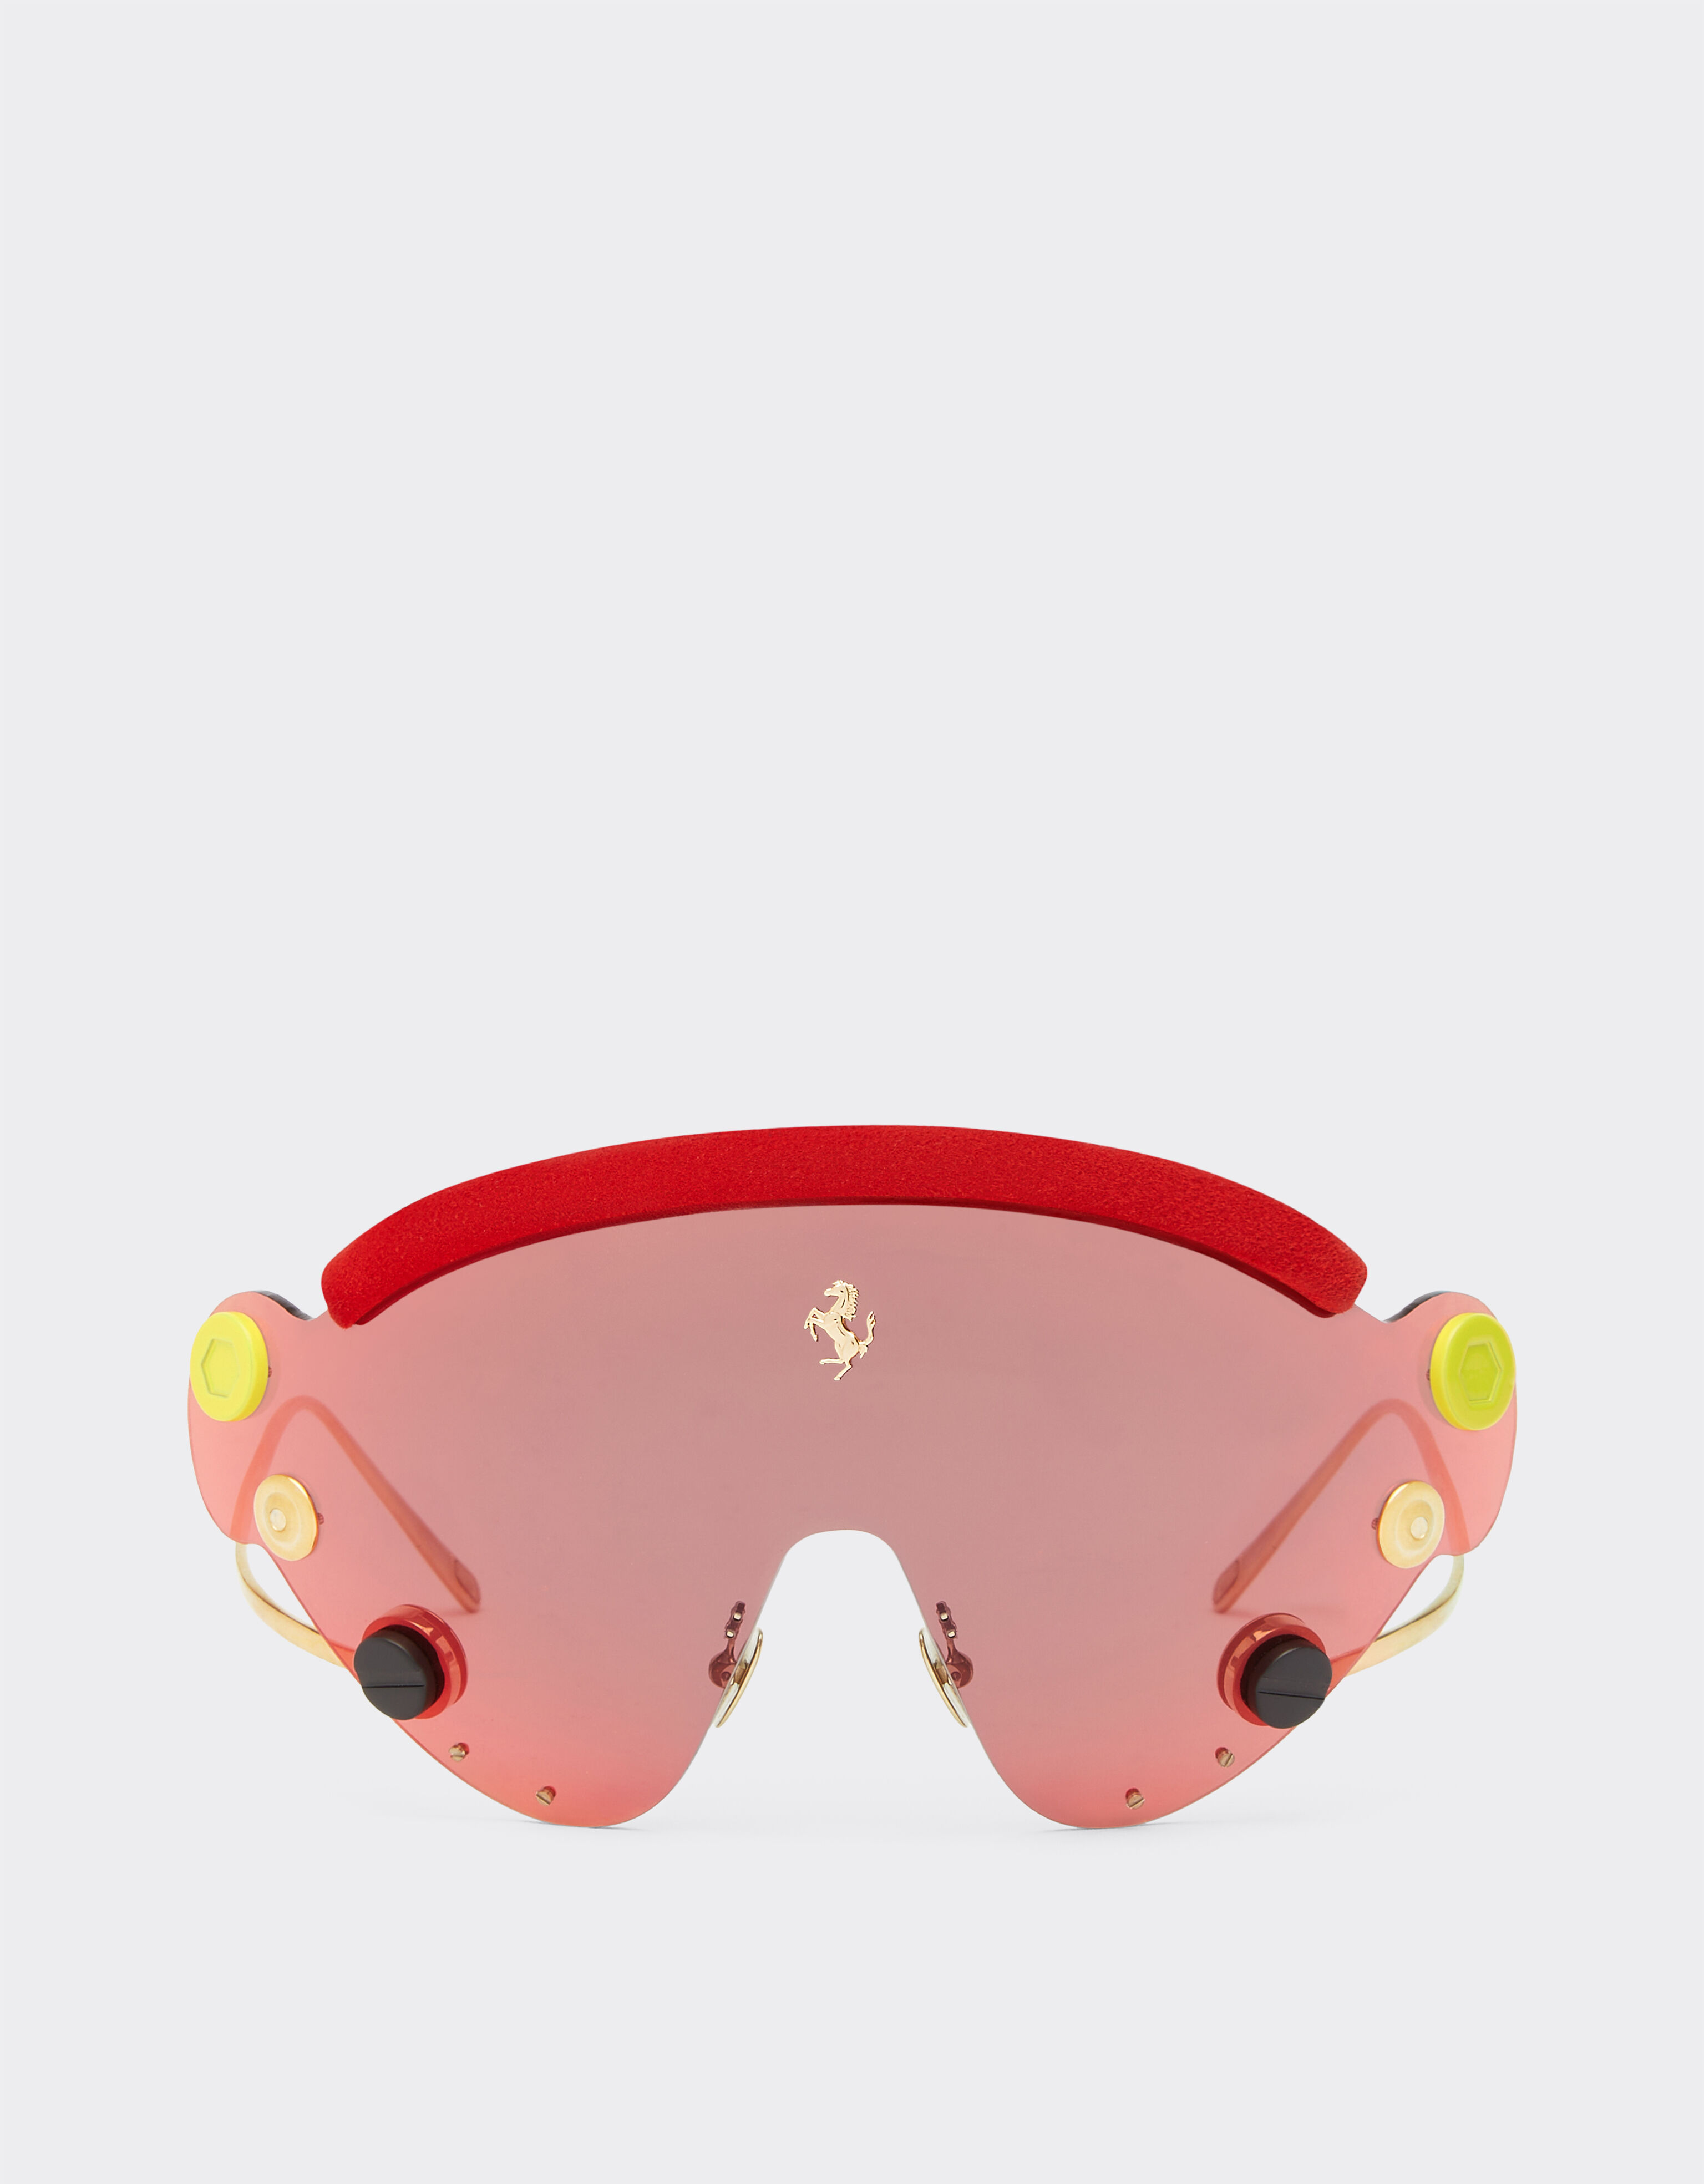 Ferrari Limited Edition Ferrari sunglasses in red and gold-tone metal with red mirror shield Black F1201f